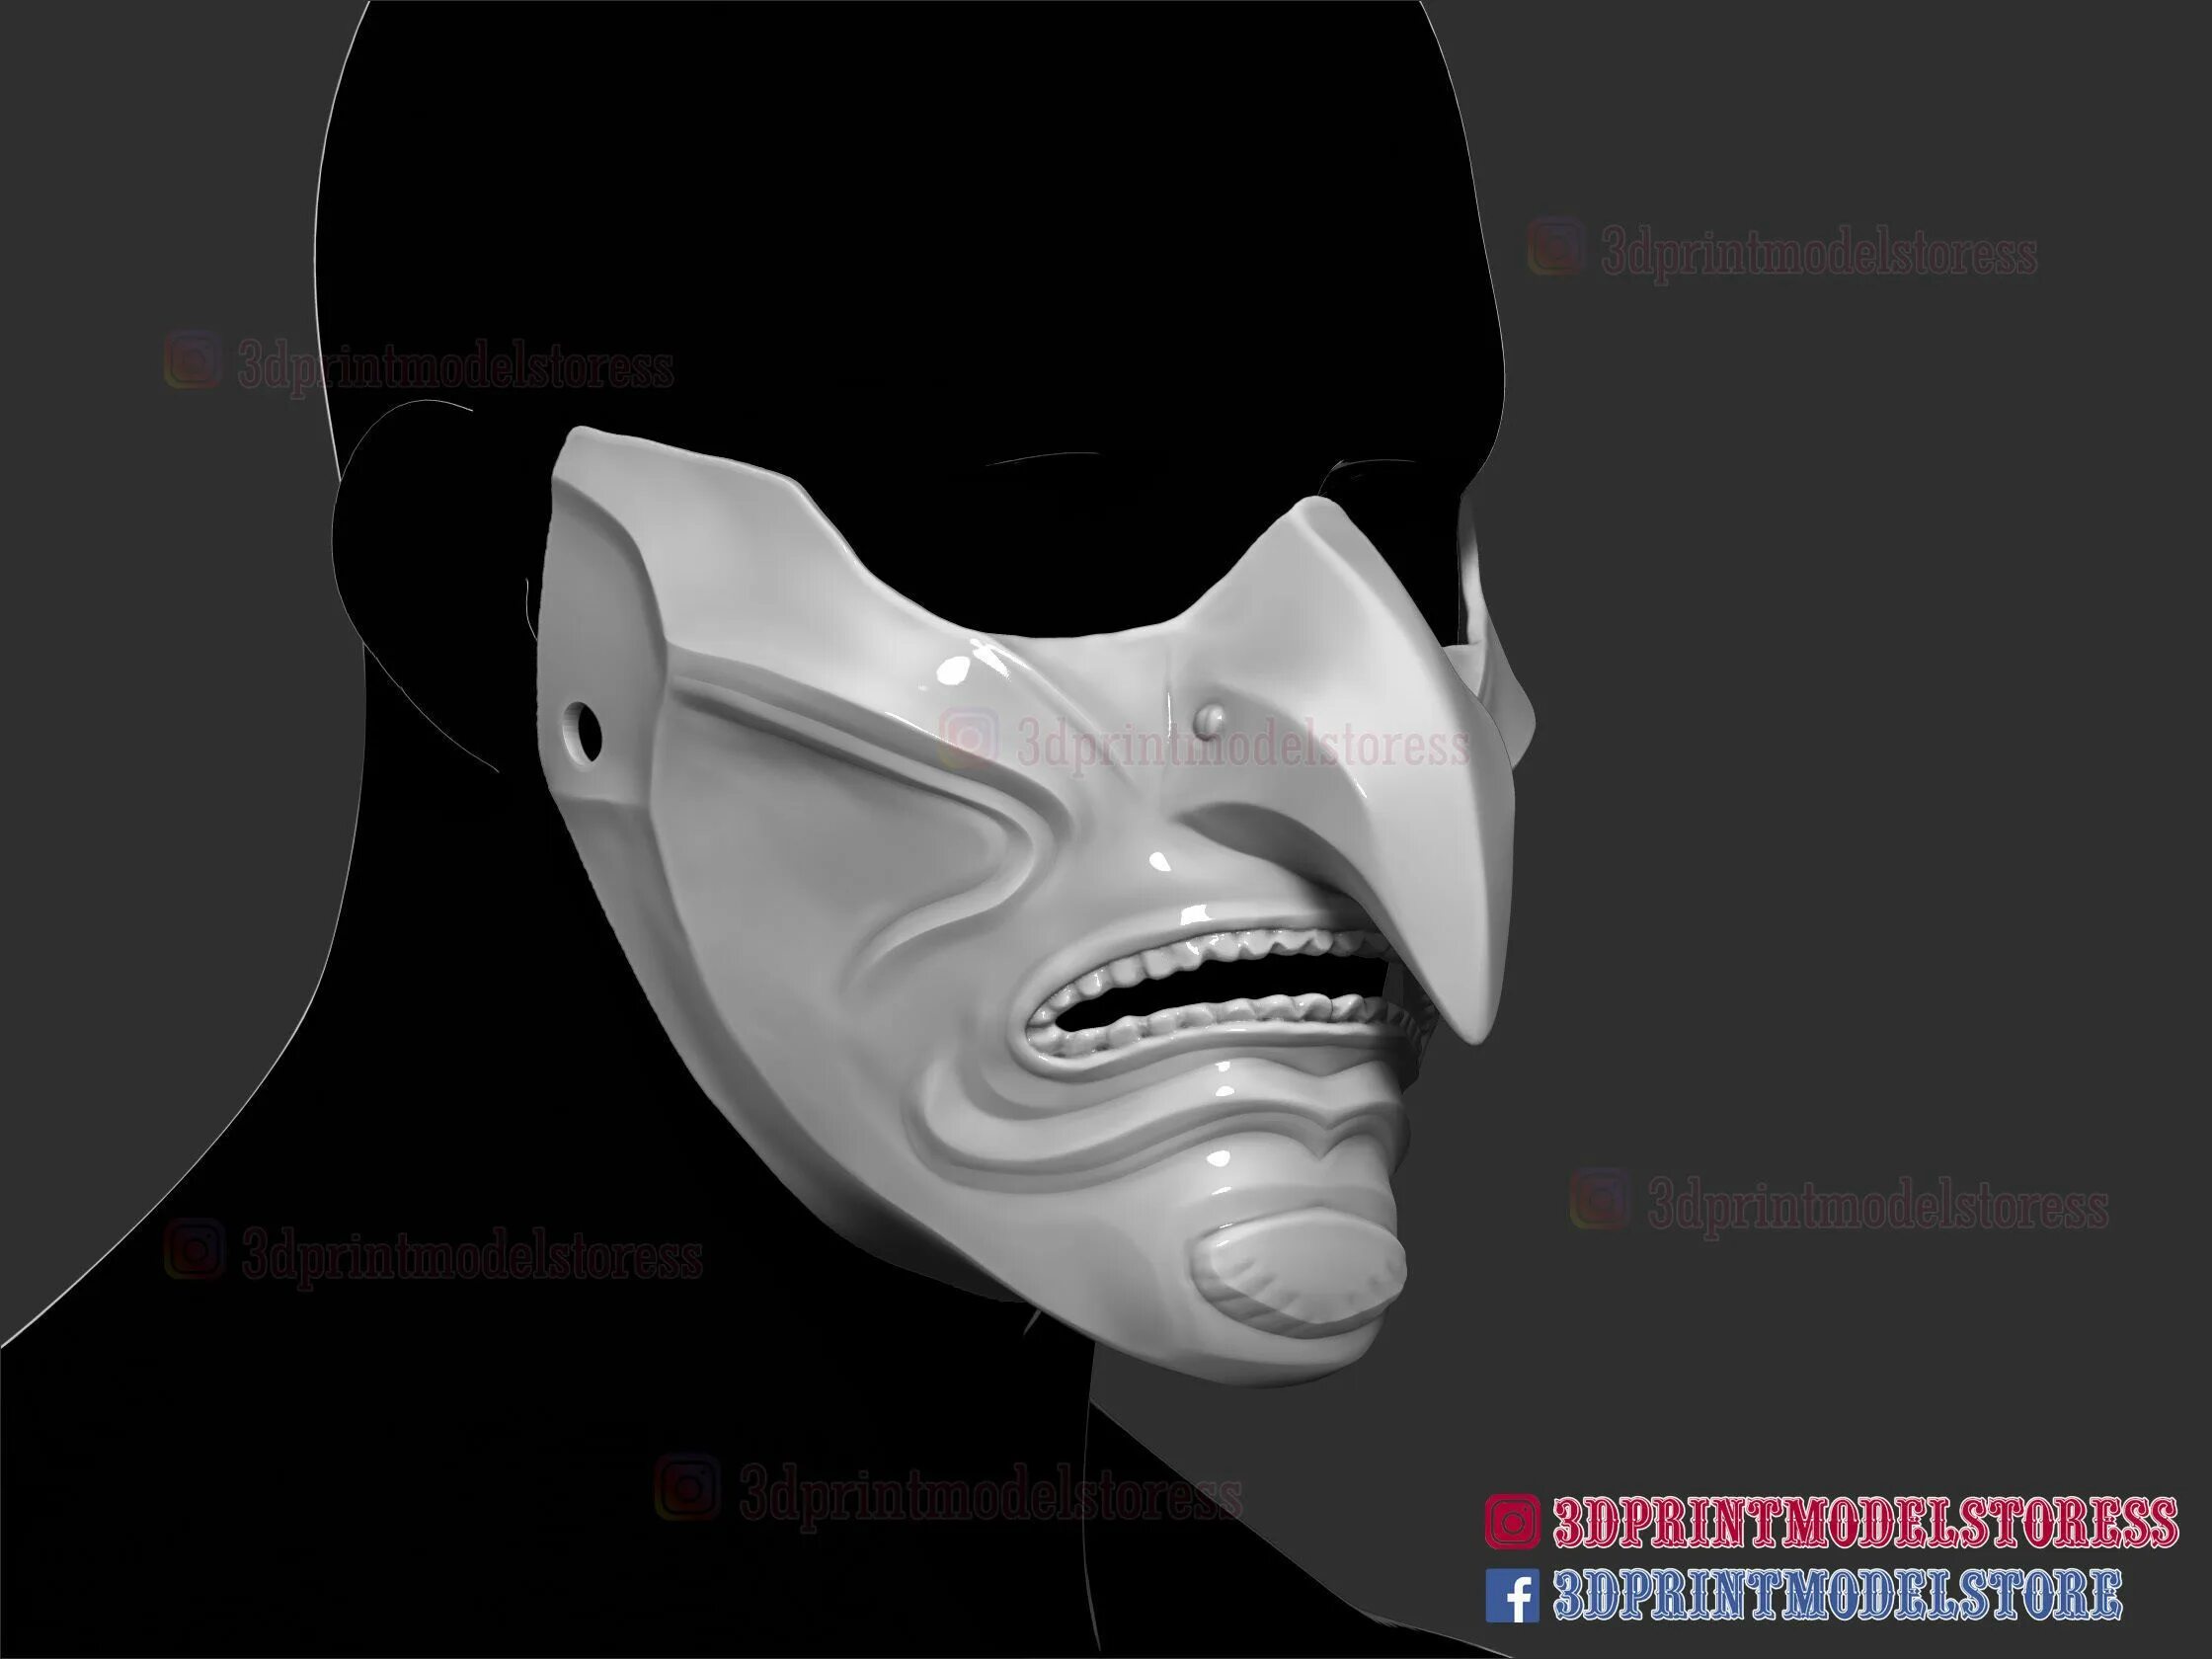 High purity маска. Гоуст маска model. Маска гоуст 3д. Ghost маска model. Гоуст маска 3д принтер.